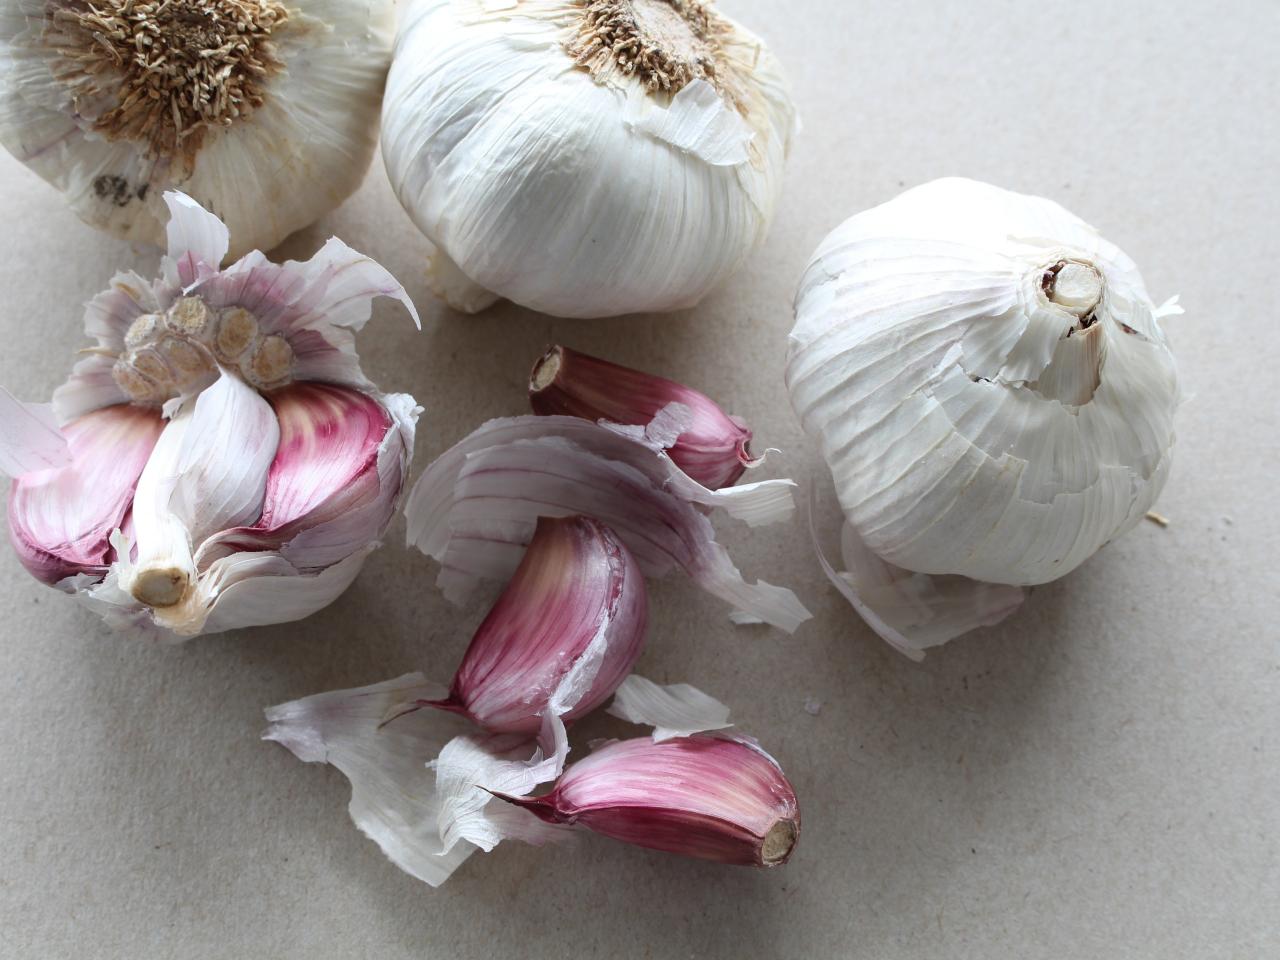 https://food.fnr.sndimg.com/content/dam/images/food/fullset/2023/1/25/garlic-on-white-surface.jpg.rend.hgtvcom.1280.960.suffix/1674672461934.jpeg